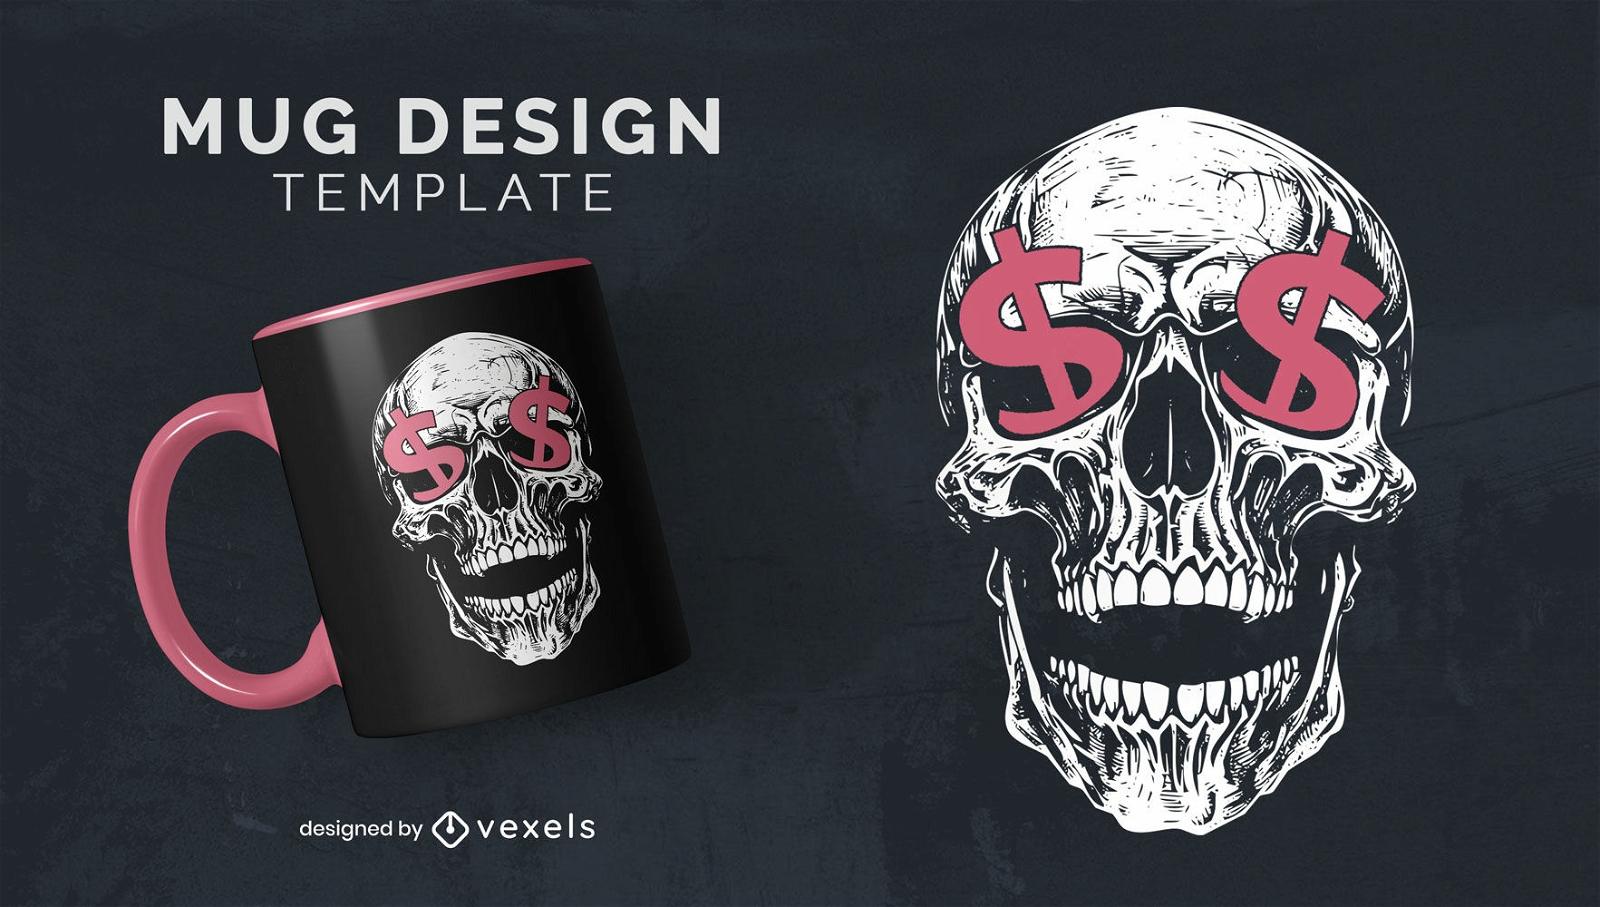 Skull and money signs mug design template